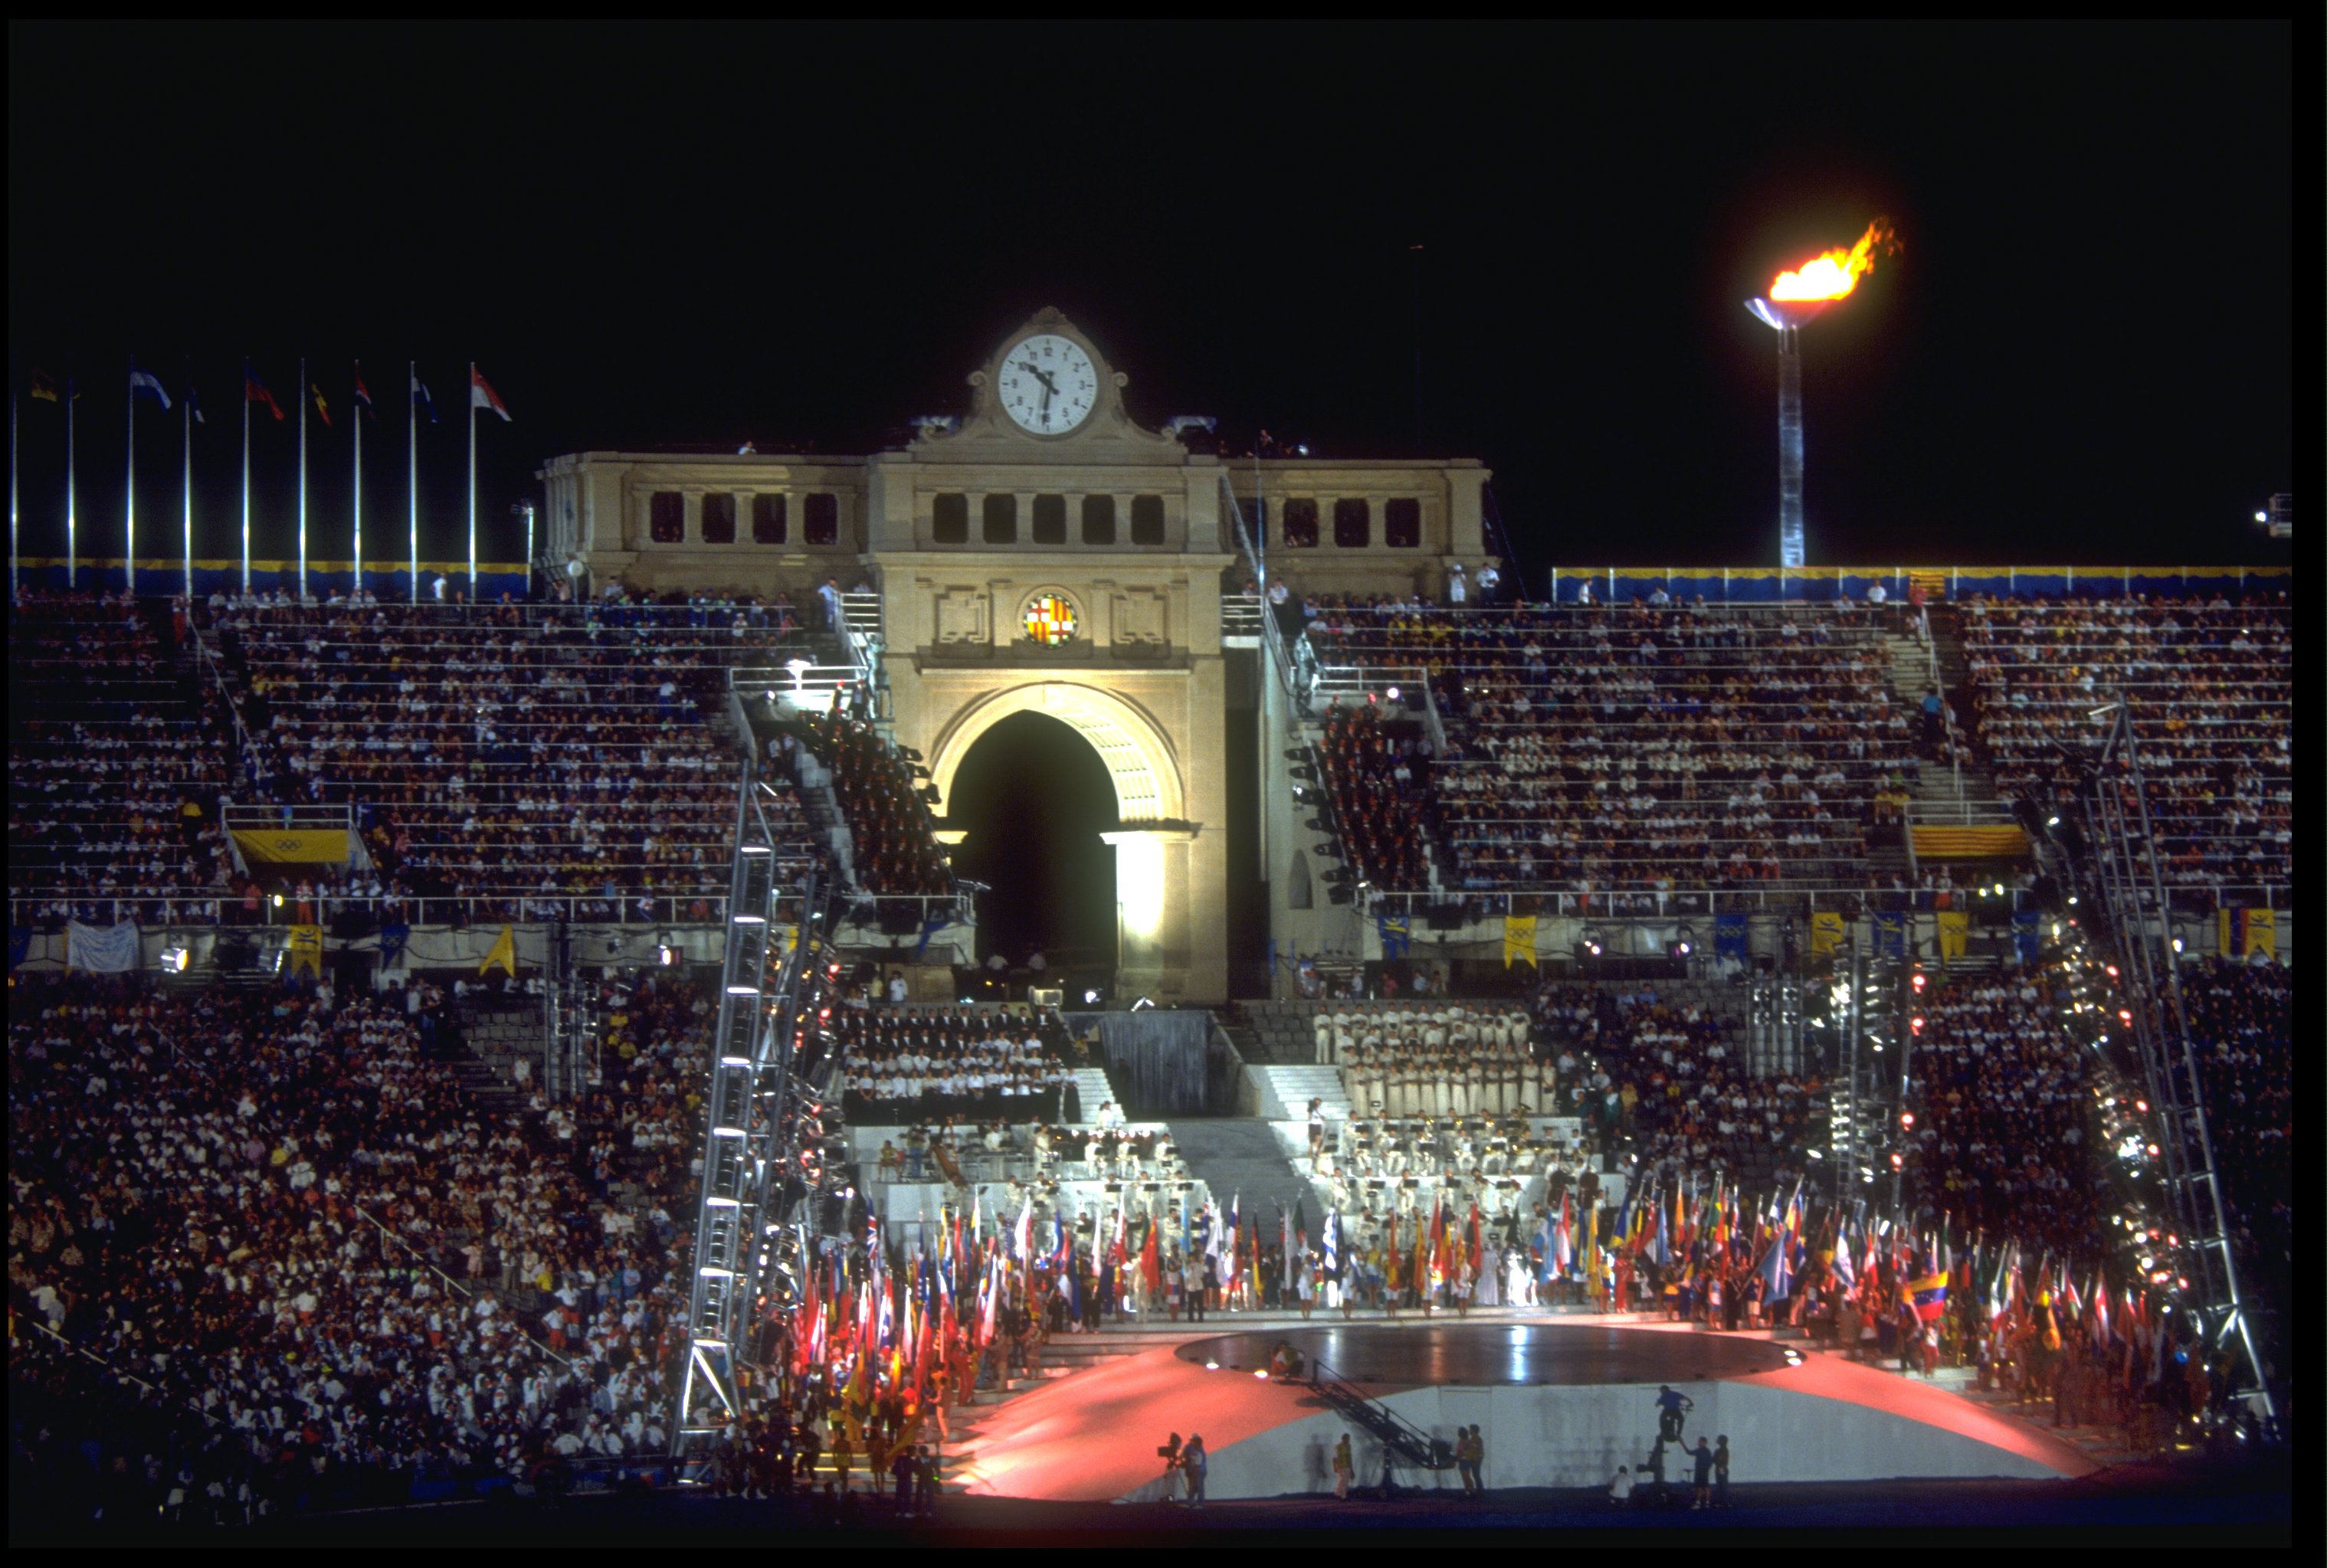 Barcelona 1992 | New Zealand Olympic Team